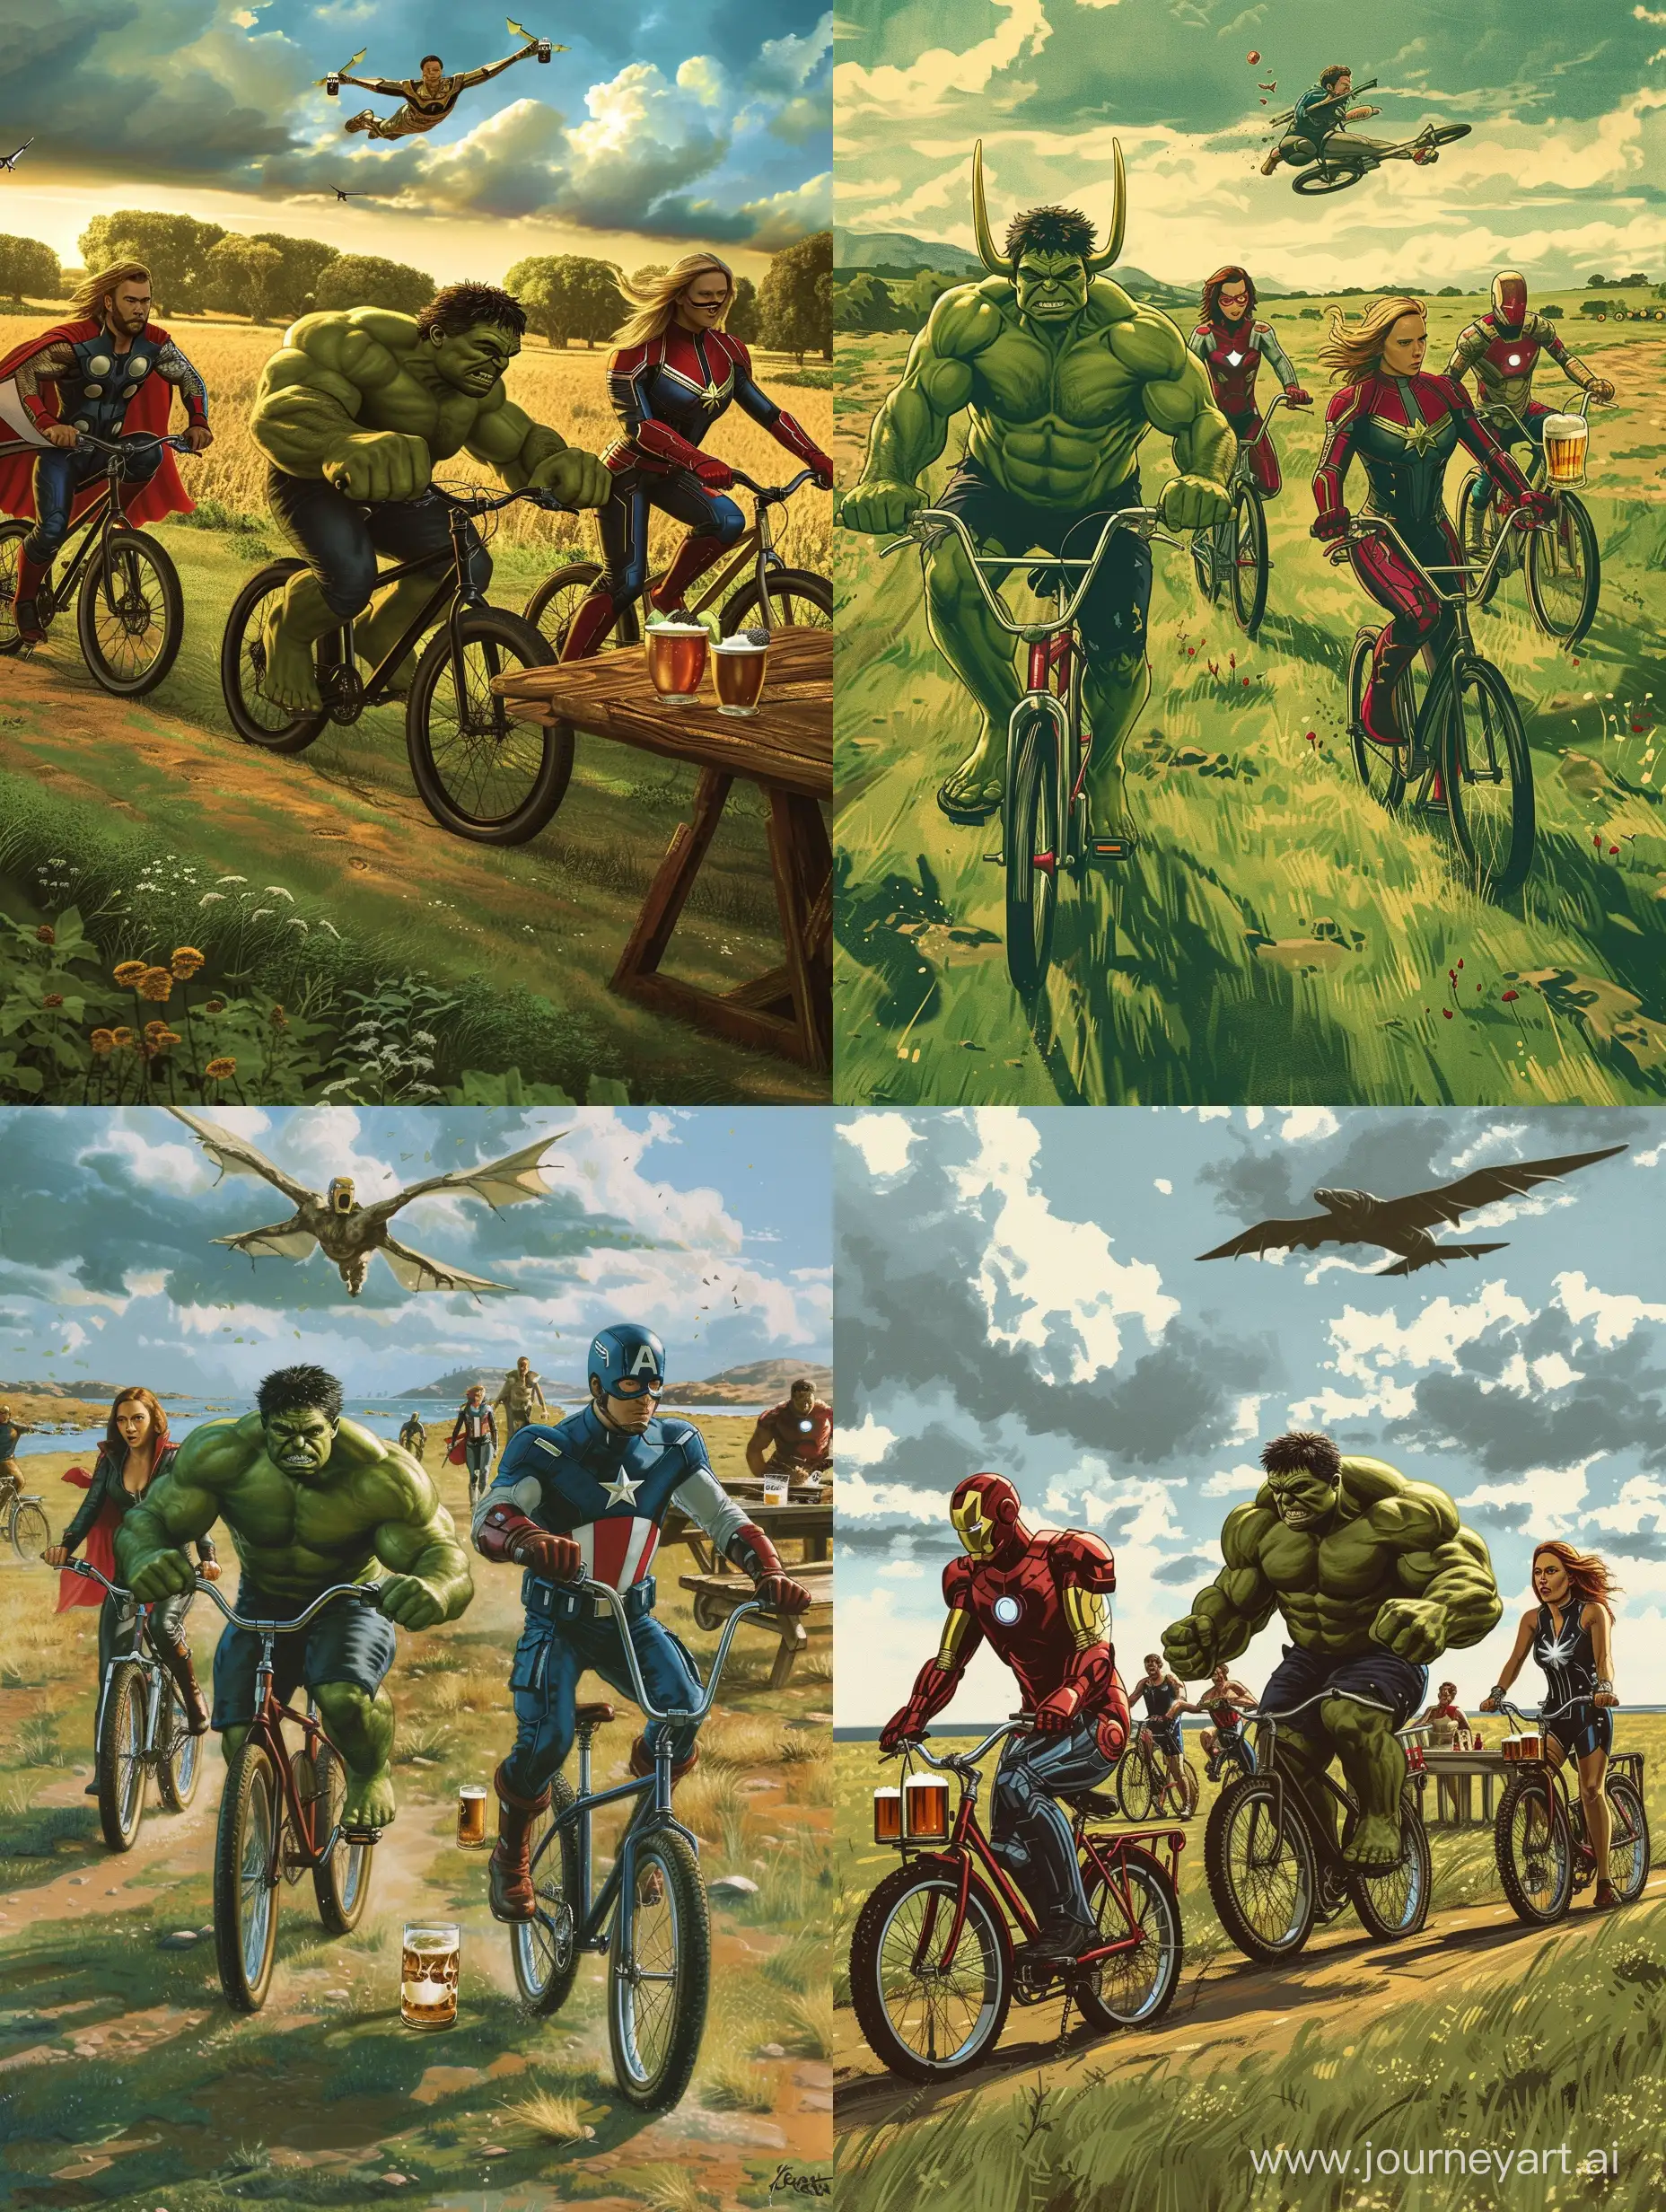 Marvel-Superheroes-Enjoy-Outdoor-Bicycling-Adventure-with-Beer